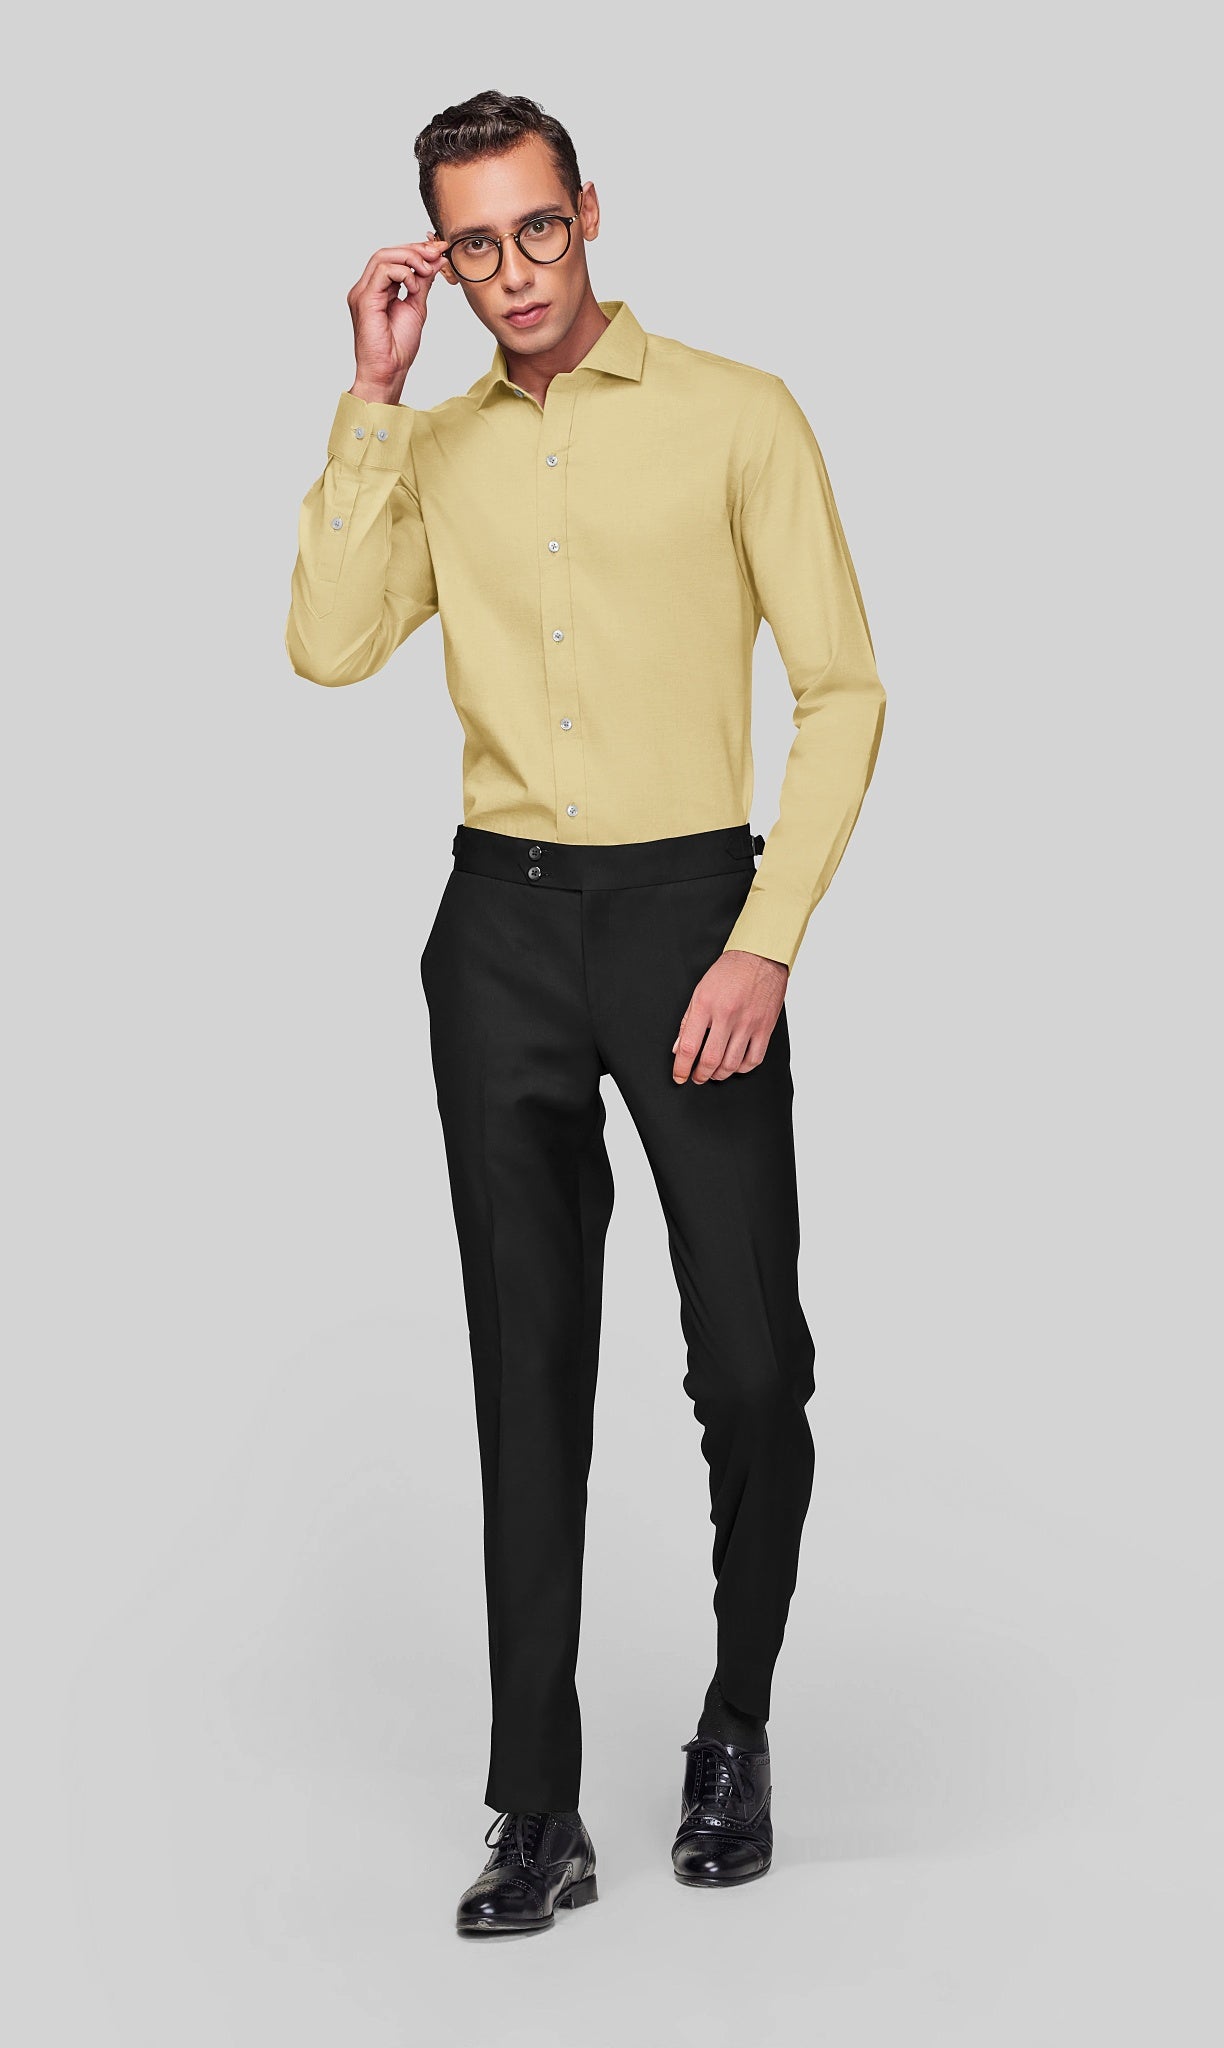 Men's Lemon Yellow Shirt